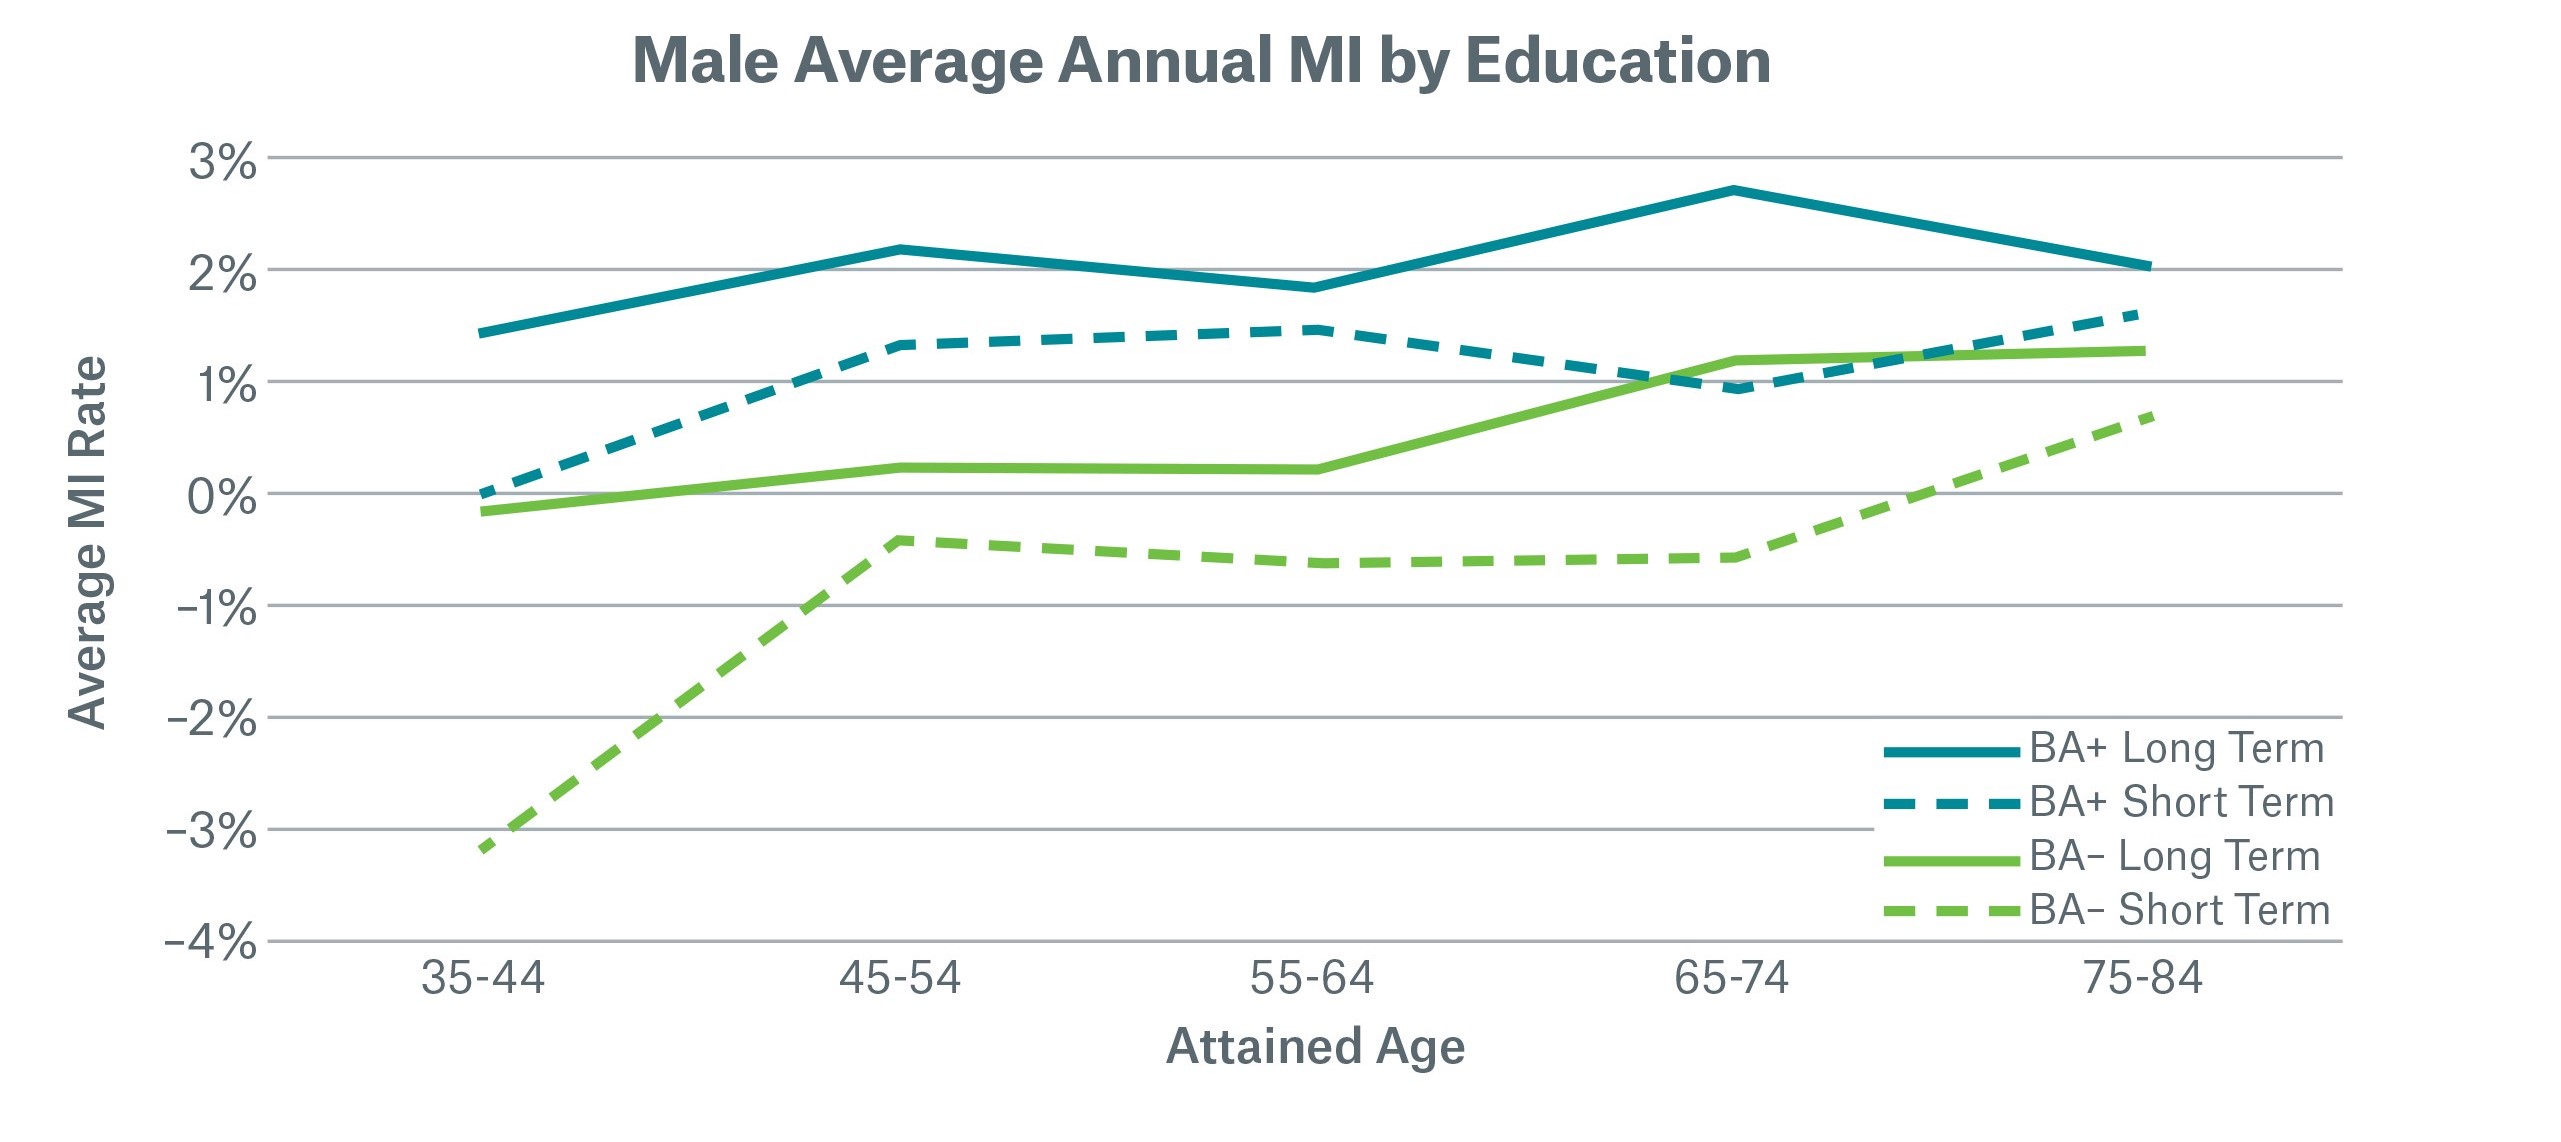 Male Average Annual MI by Education